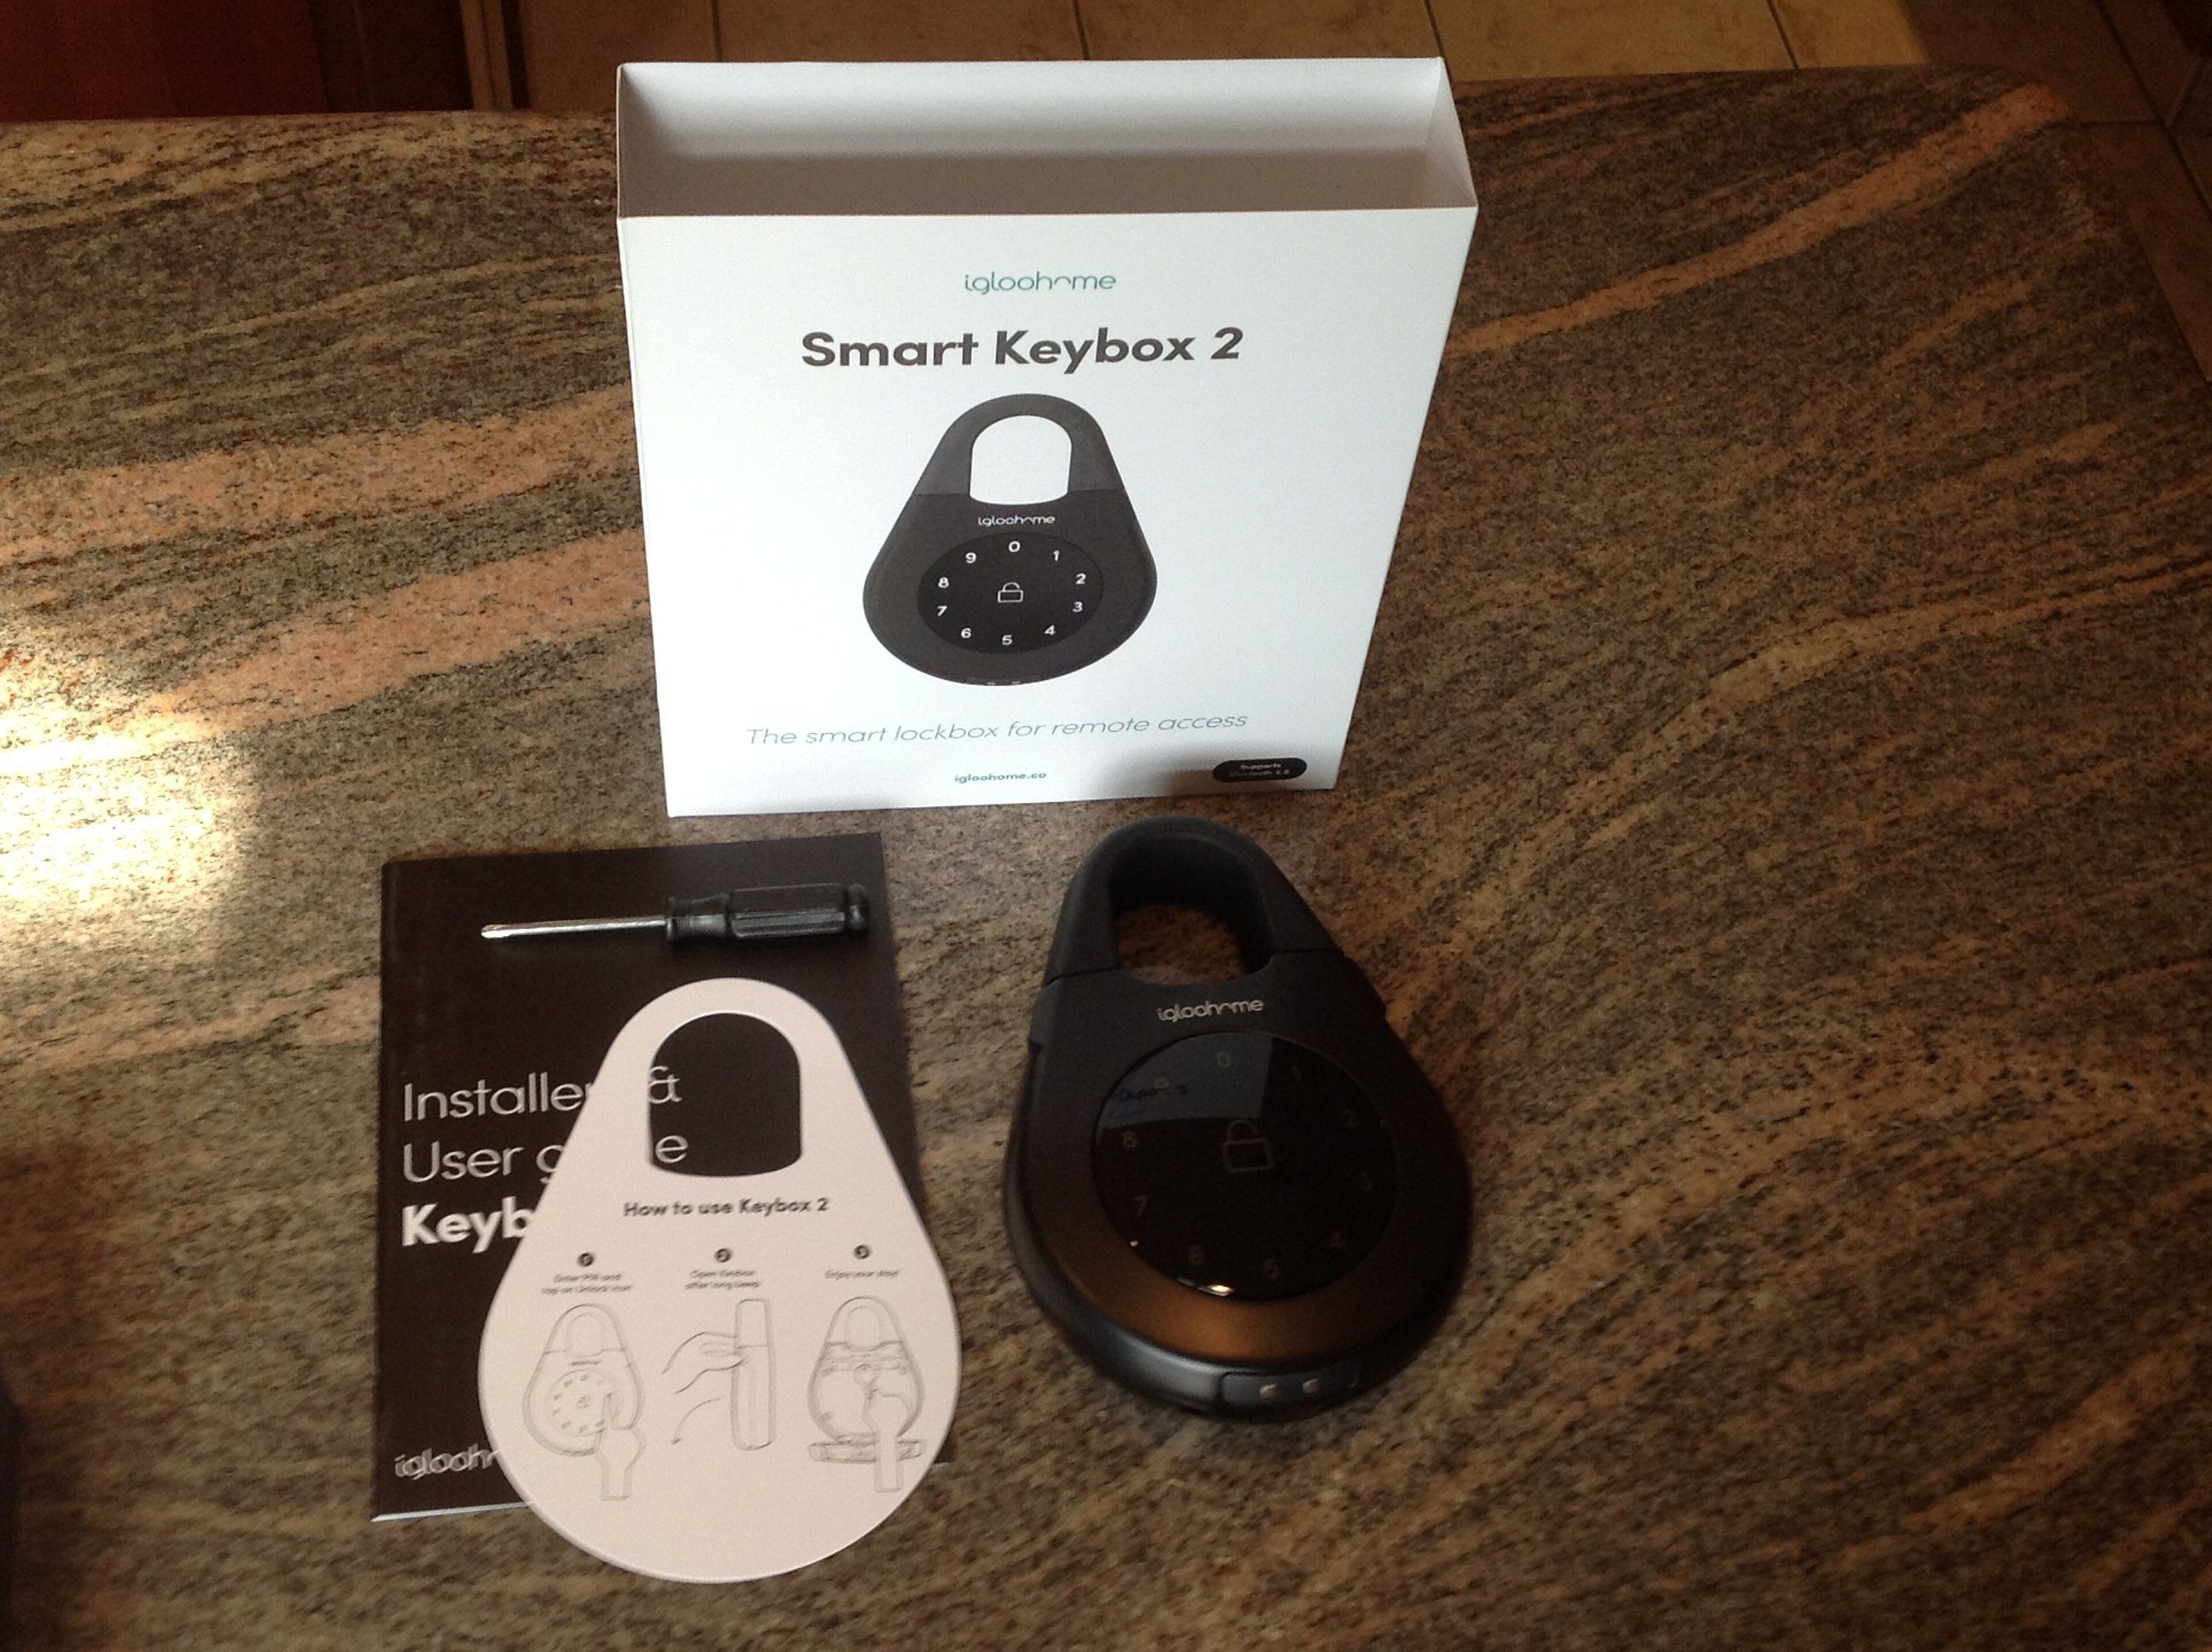 Igloohome Smart Keybox 2 Review